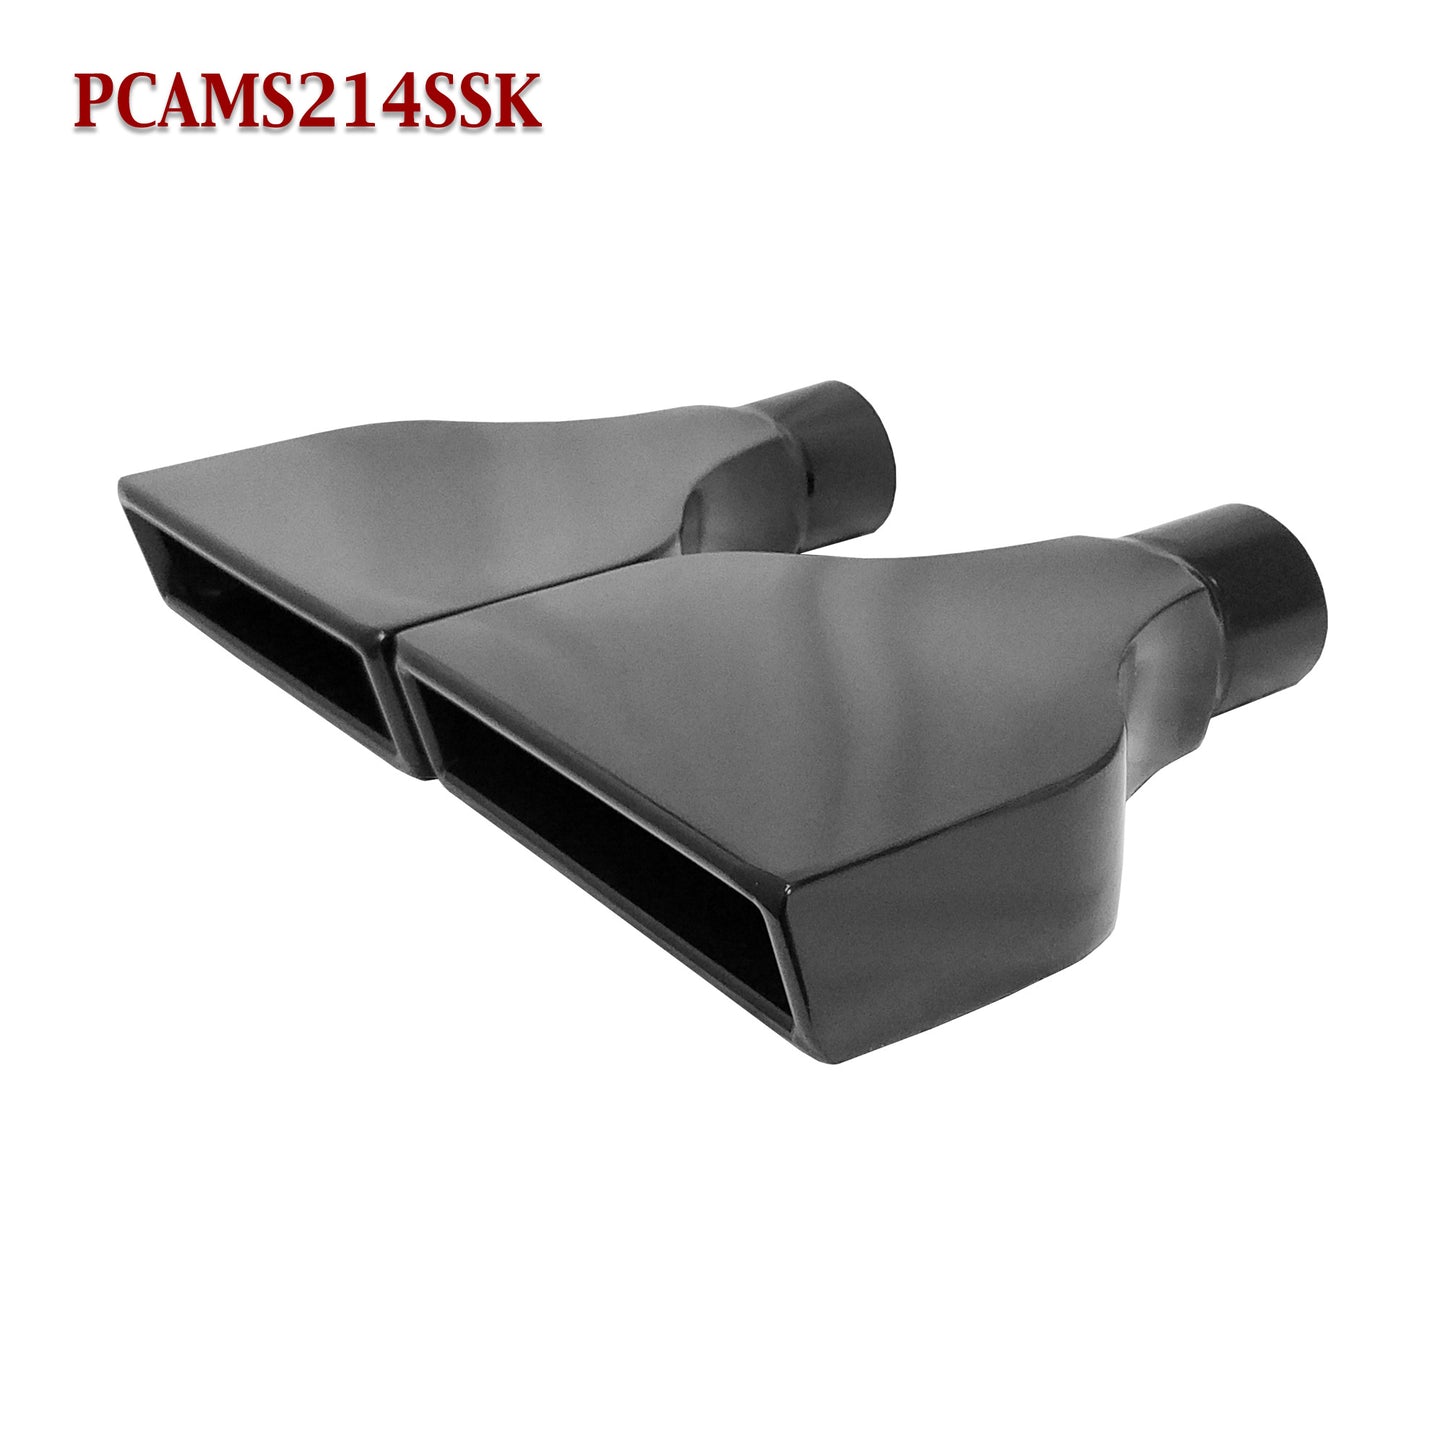 PCAMS214SSK 2.25" Black Rectangle Corvette Camaro Exhaust Tip 2 1/4" Inlet 10" Long